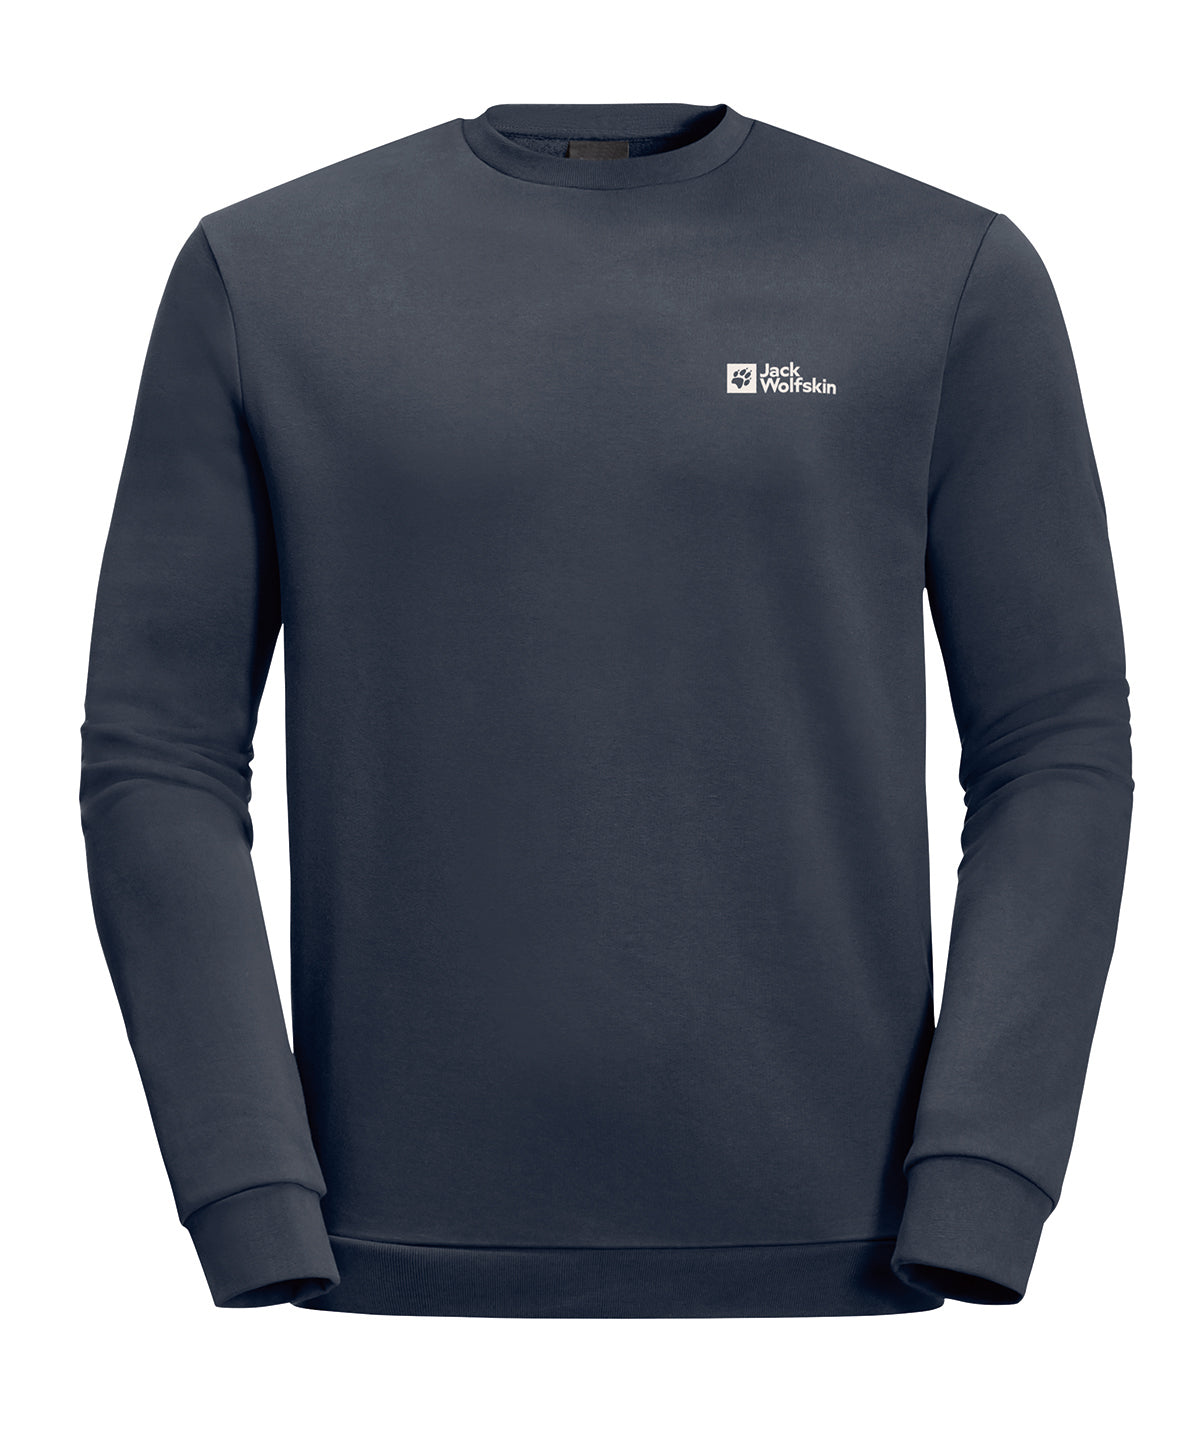 Personalised Sweatshirts - Black Jack Wolfskin Organic sweatshirt  (NL)